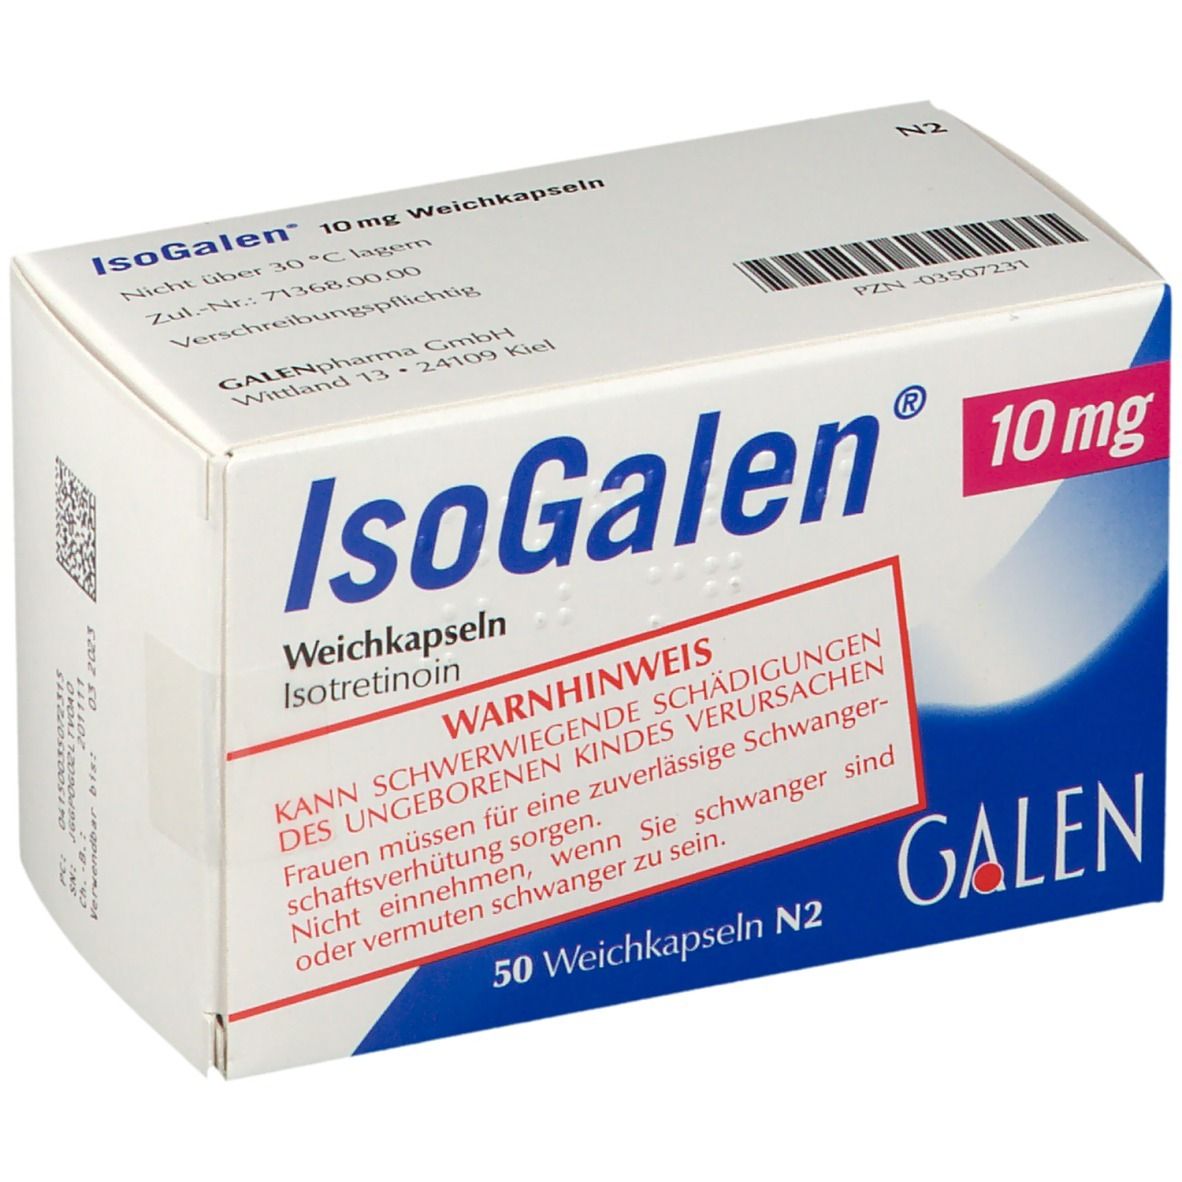 IsoGalen® 10 mg